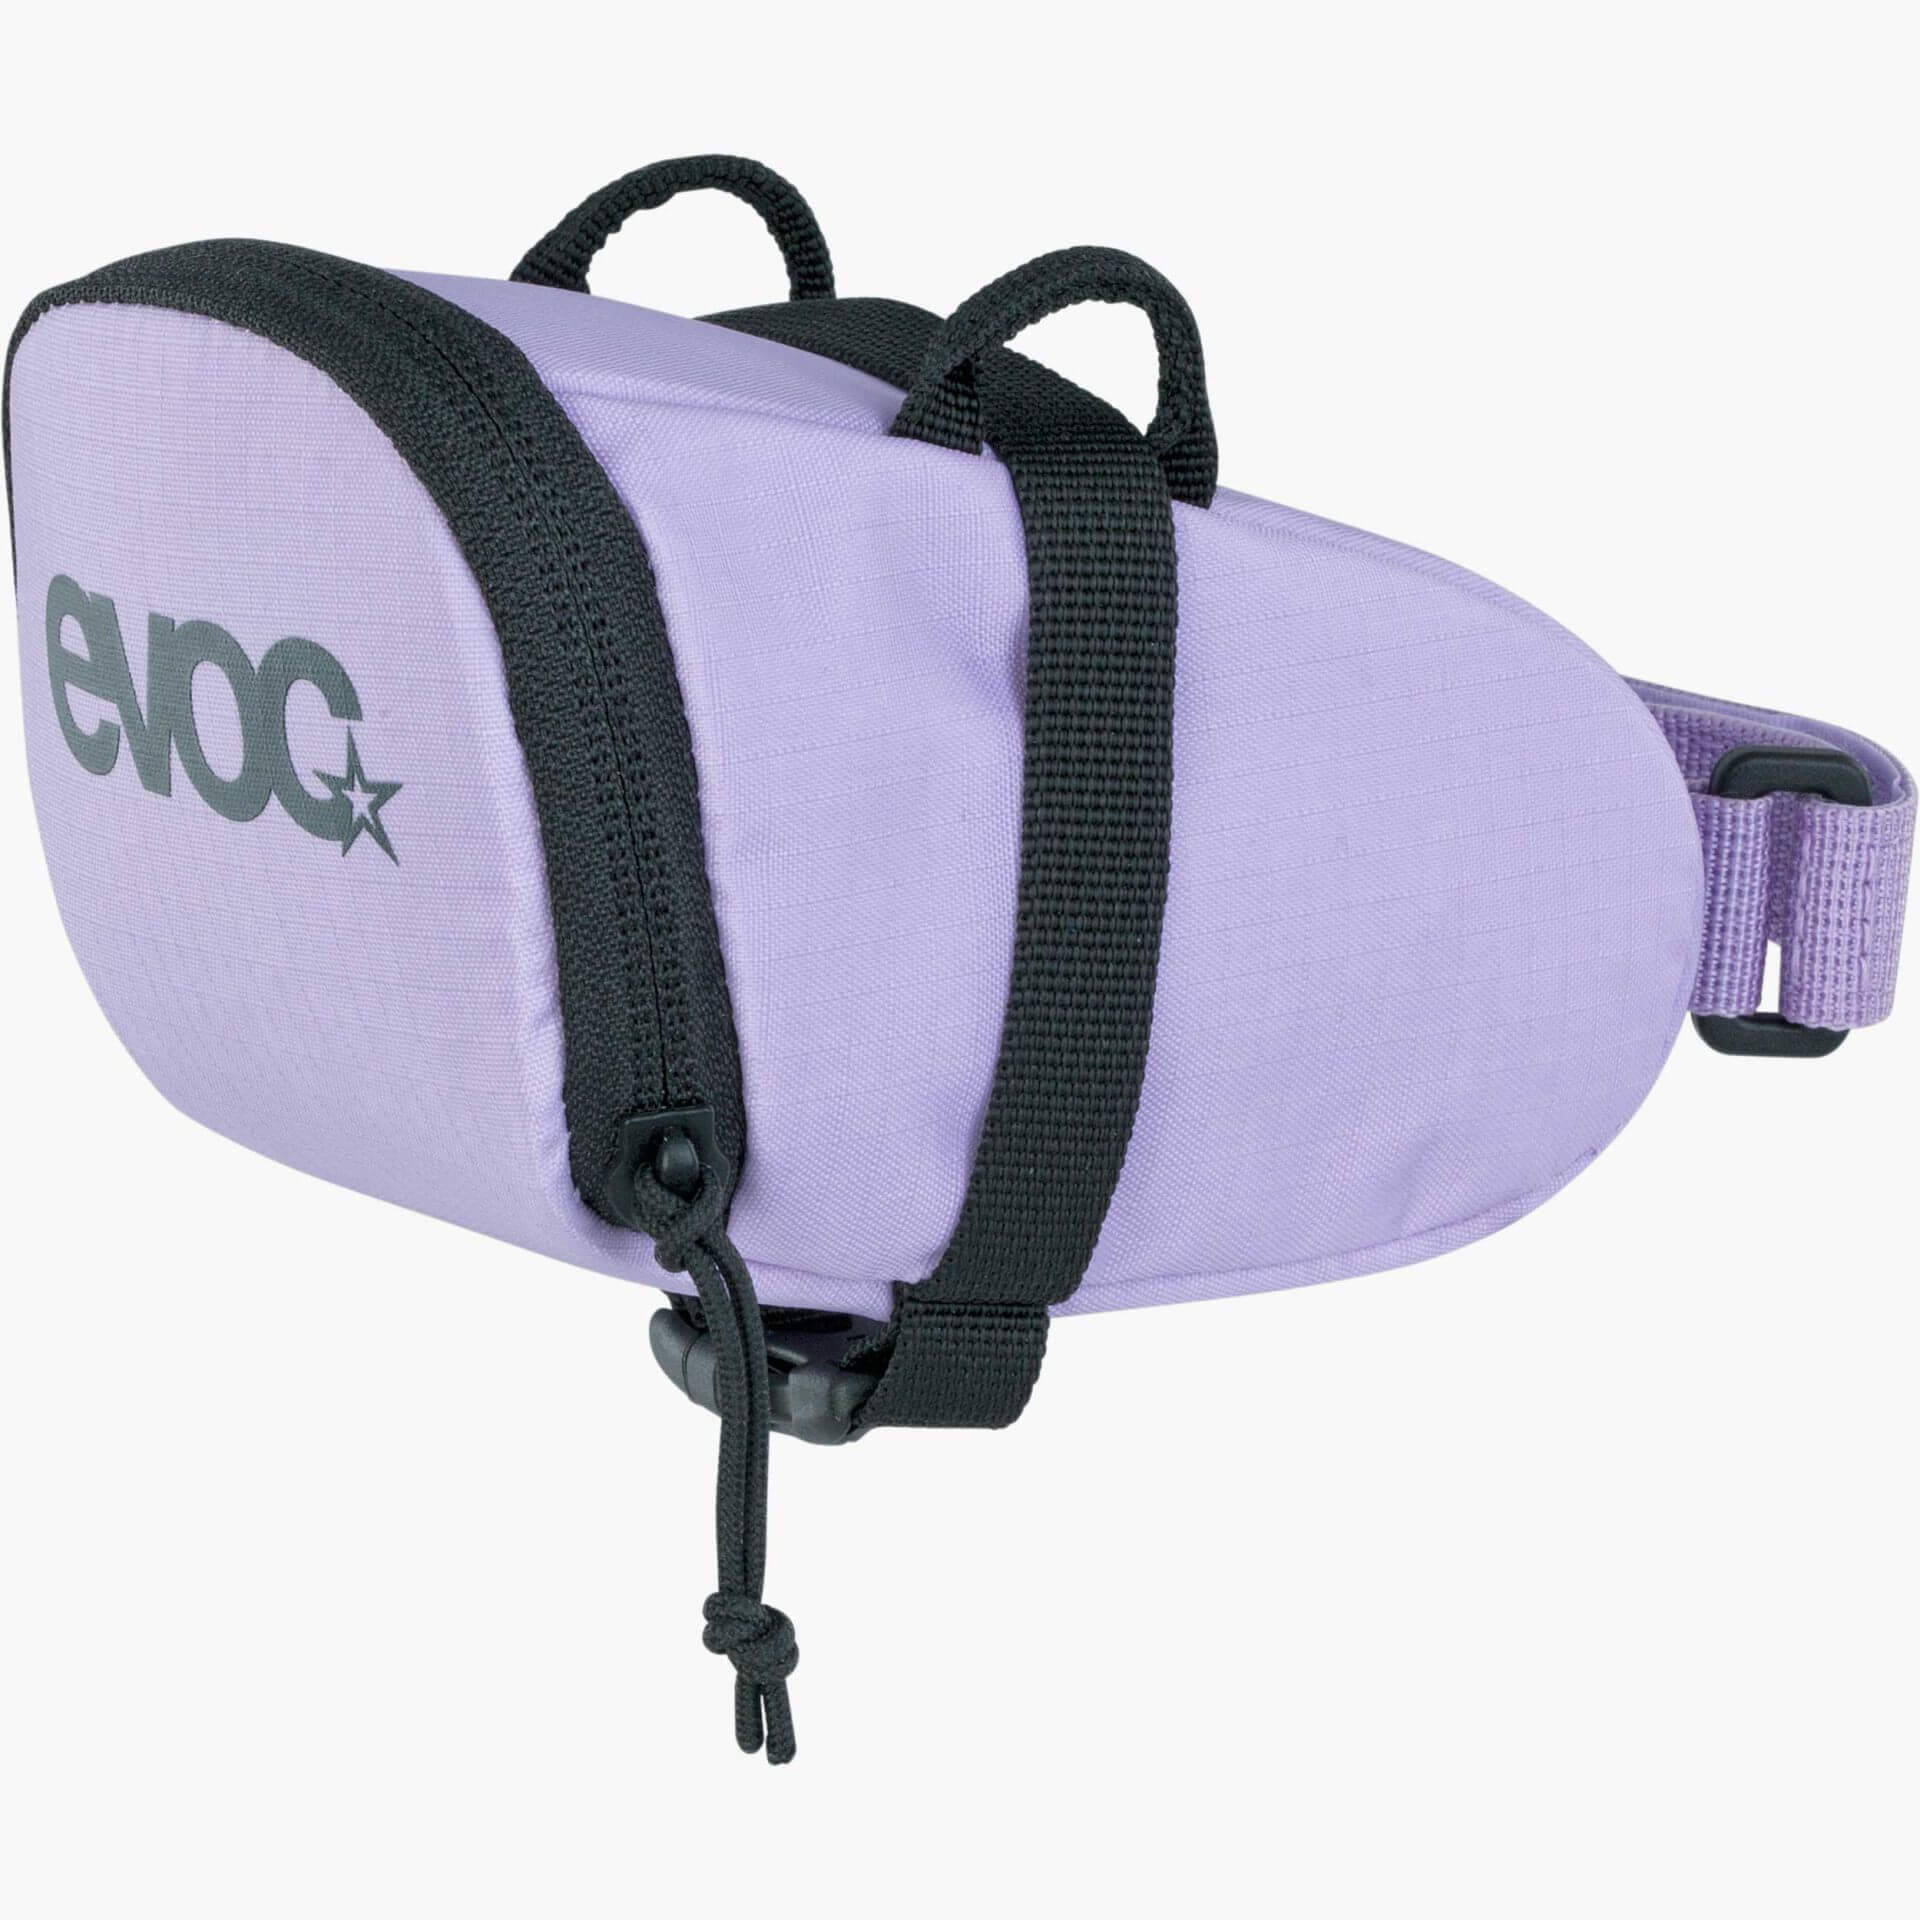 Evoc Seat Bag - multicolor (carbon grey/purple rose/black)